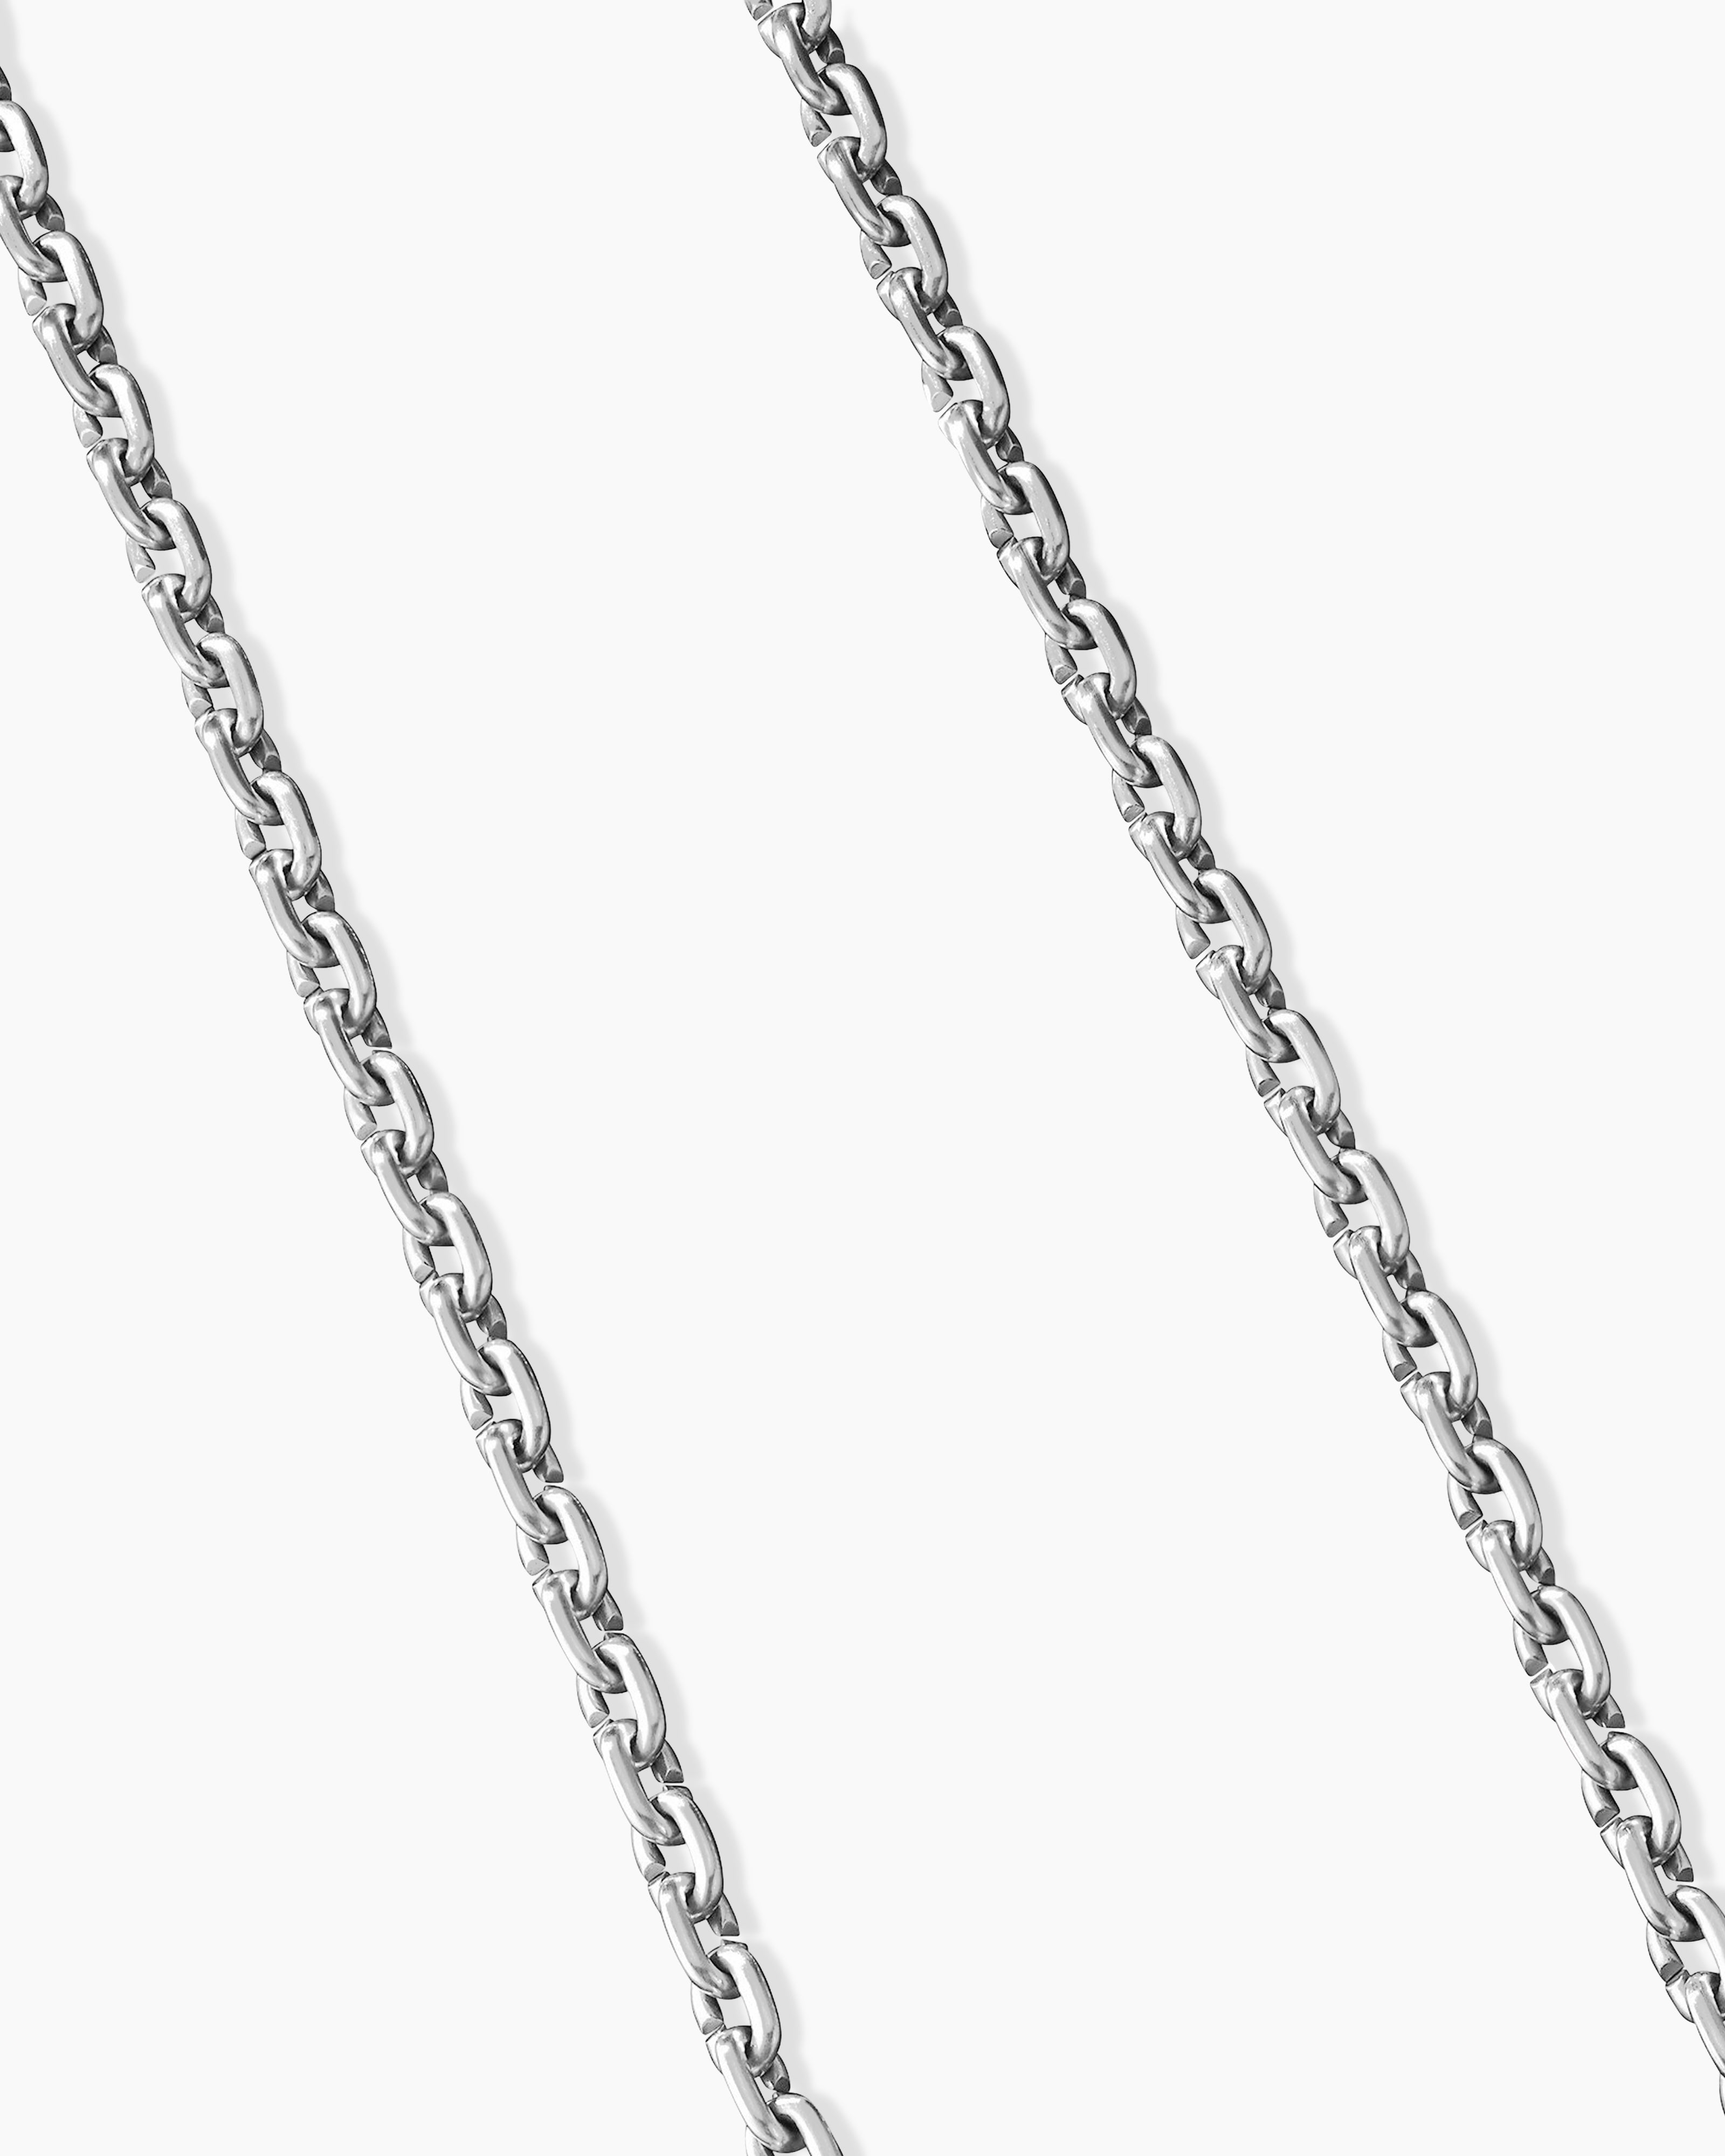 David Yurman Chain Link Narrow Necklace